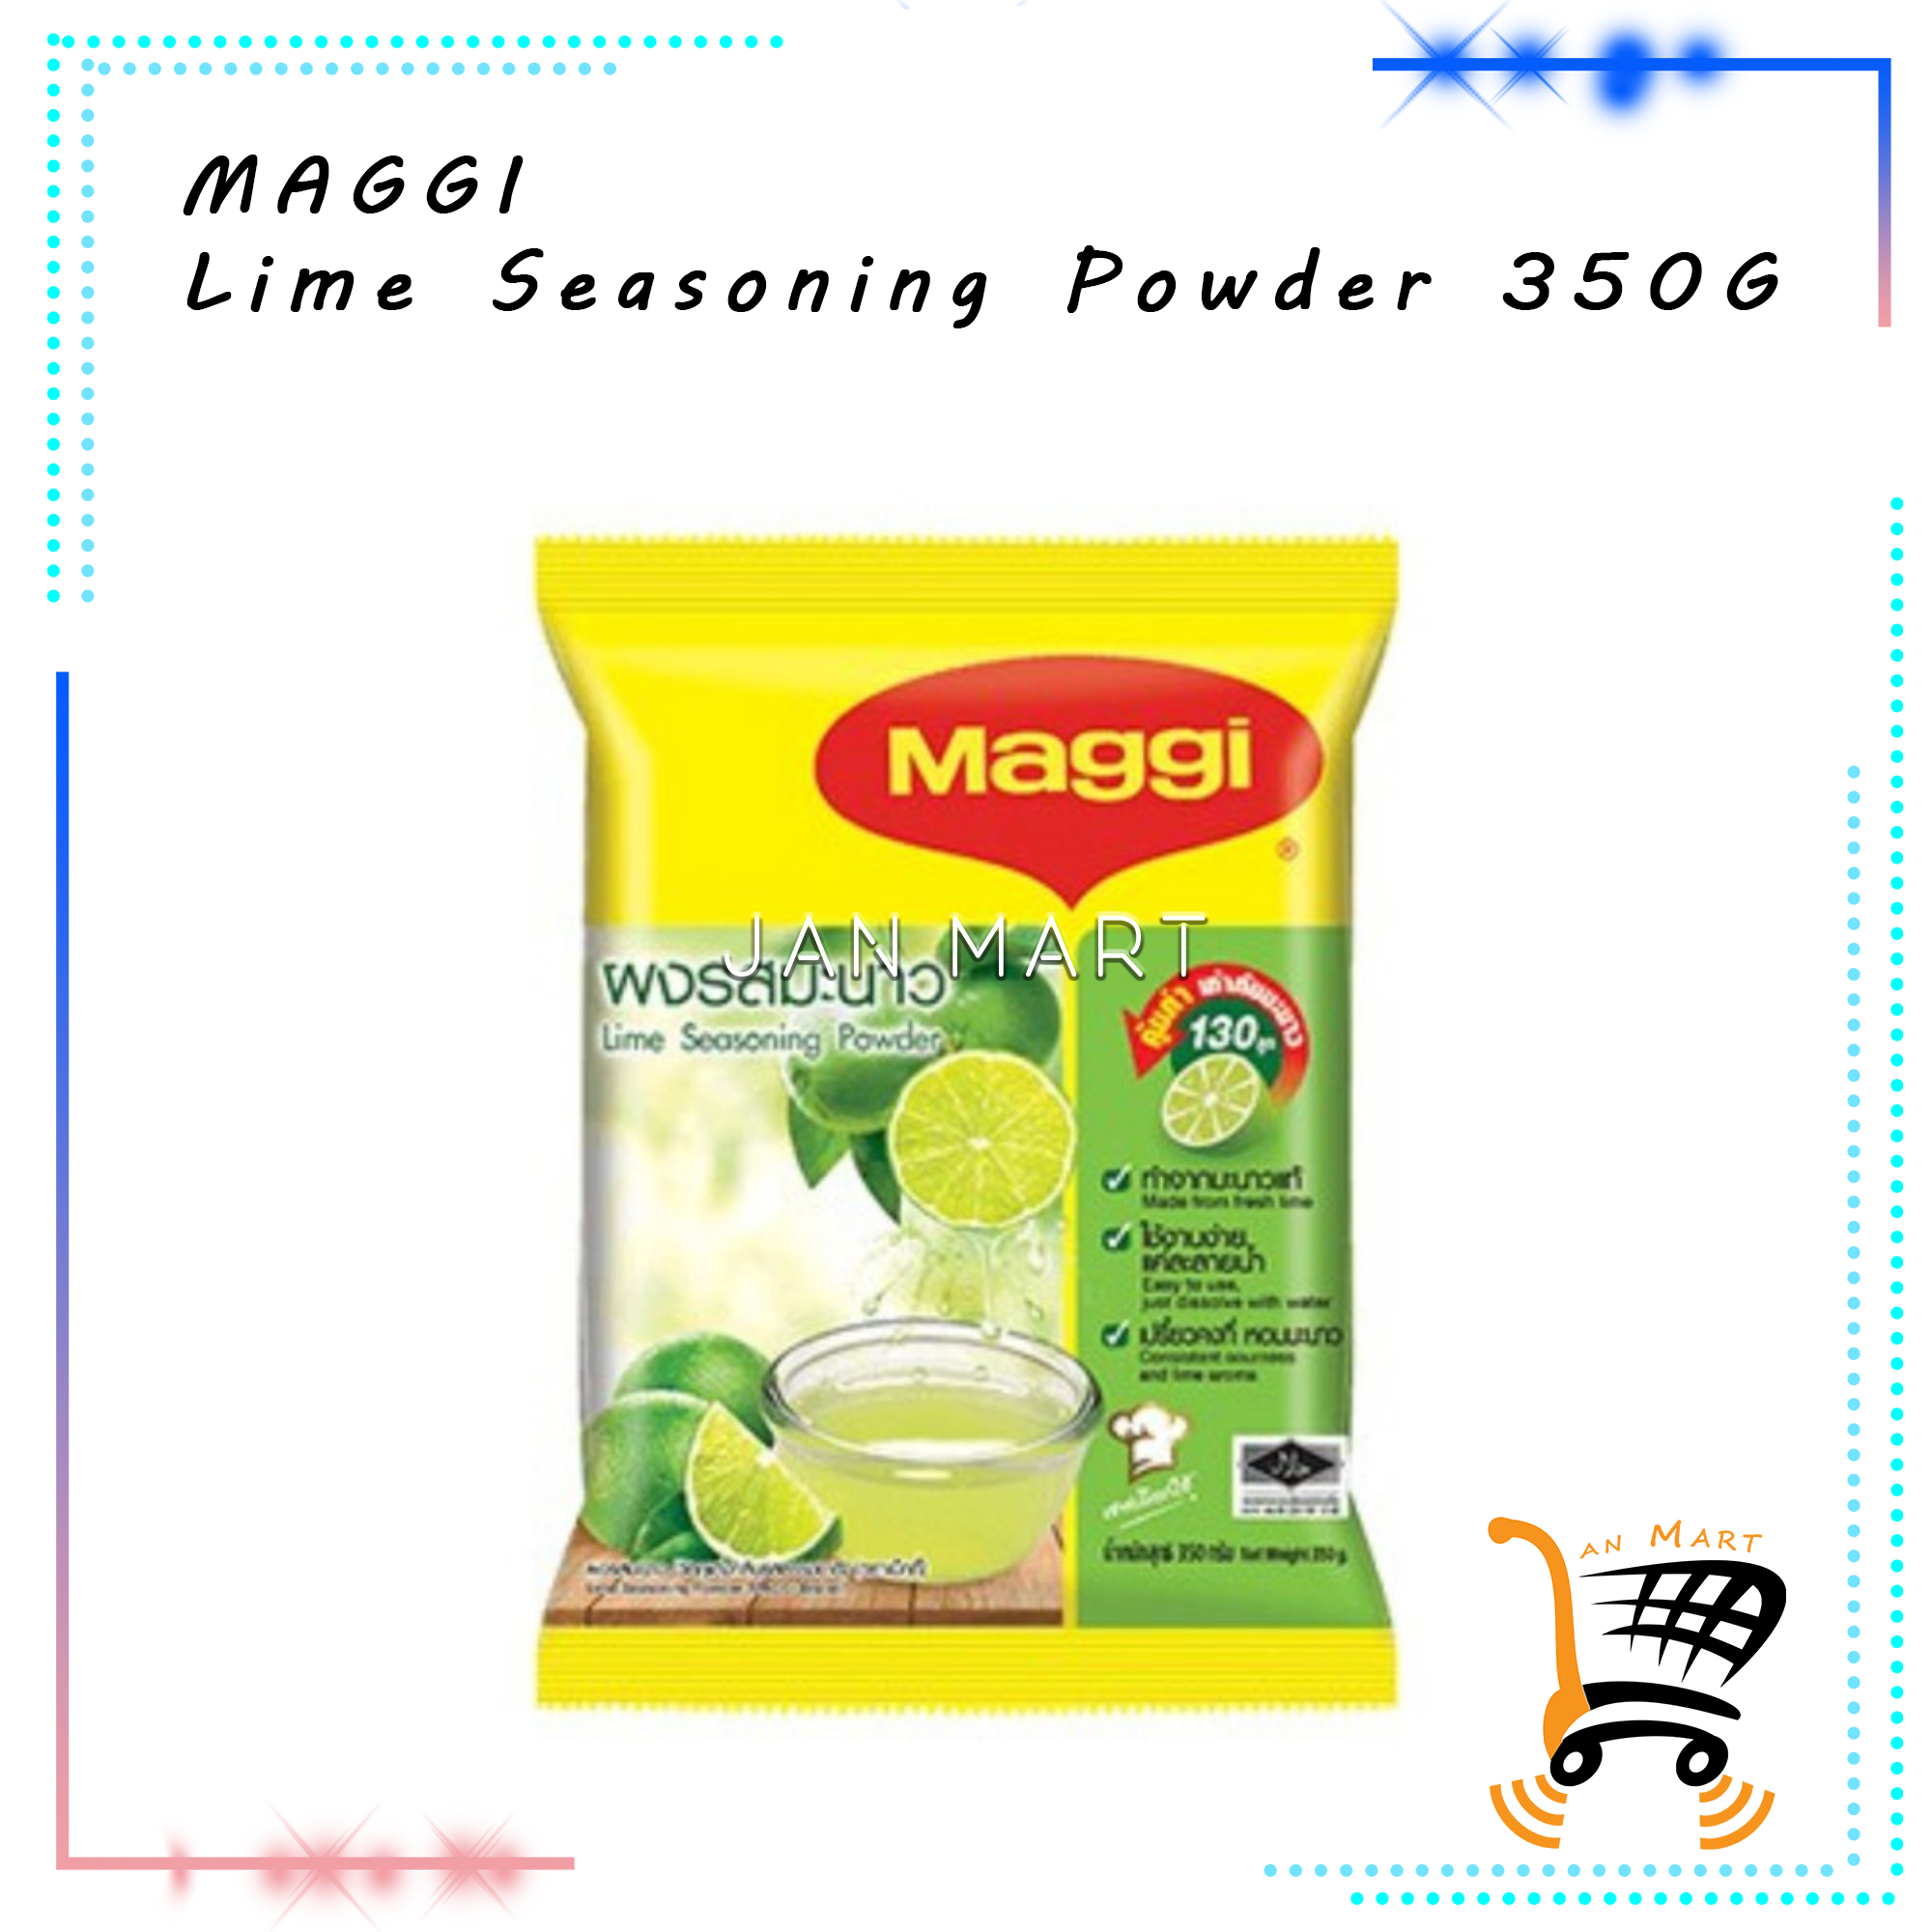 MAGGI Lime Seasoning Powder 350G